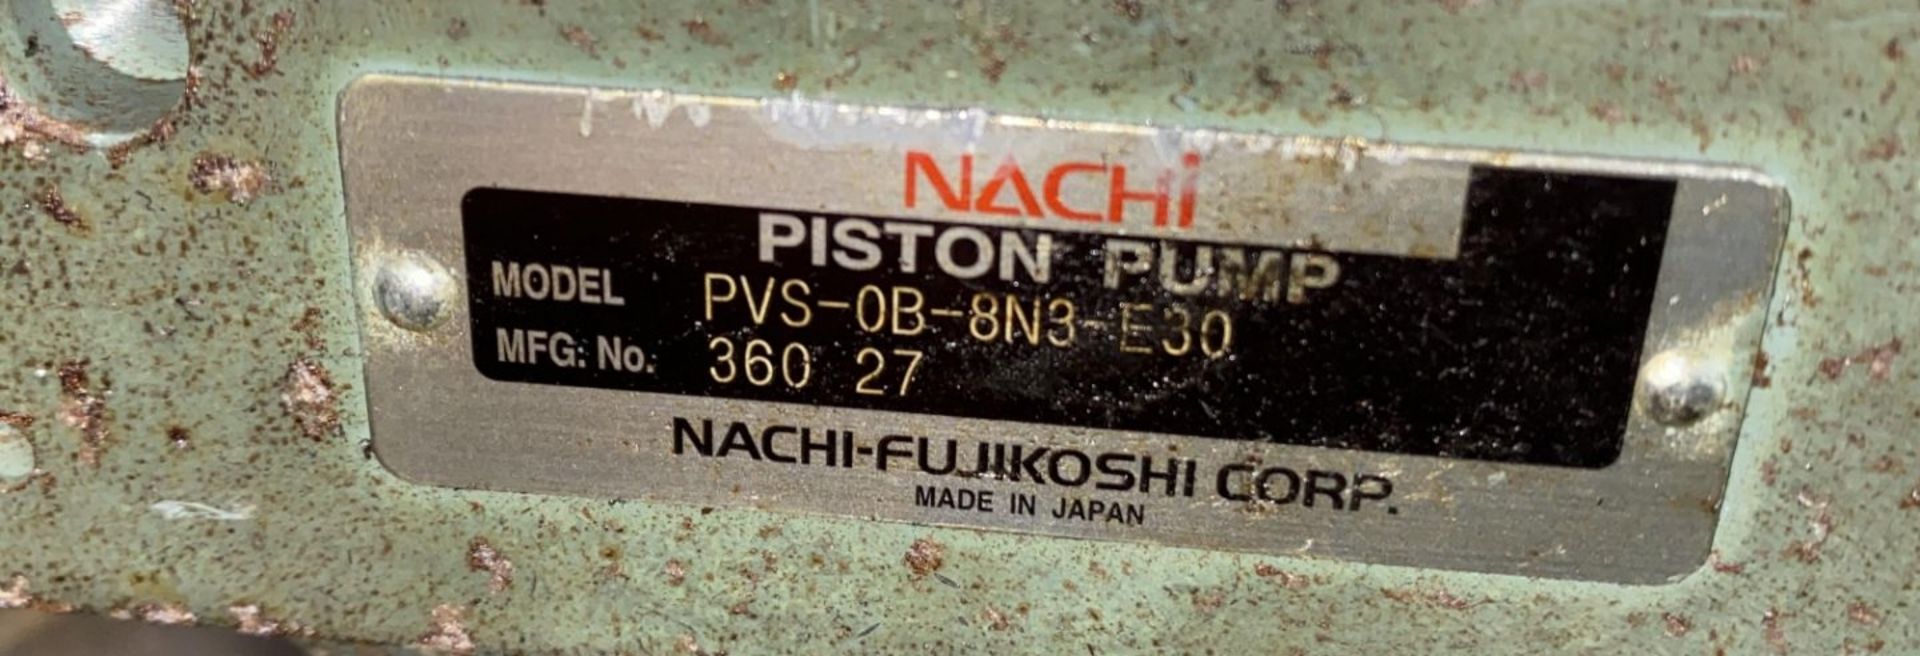 Nachi Piston Pump PVS-0B-8N3-E30 - Image 2 of 2